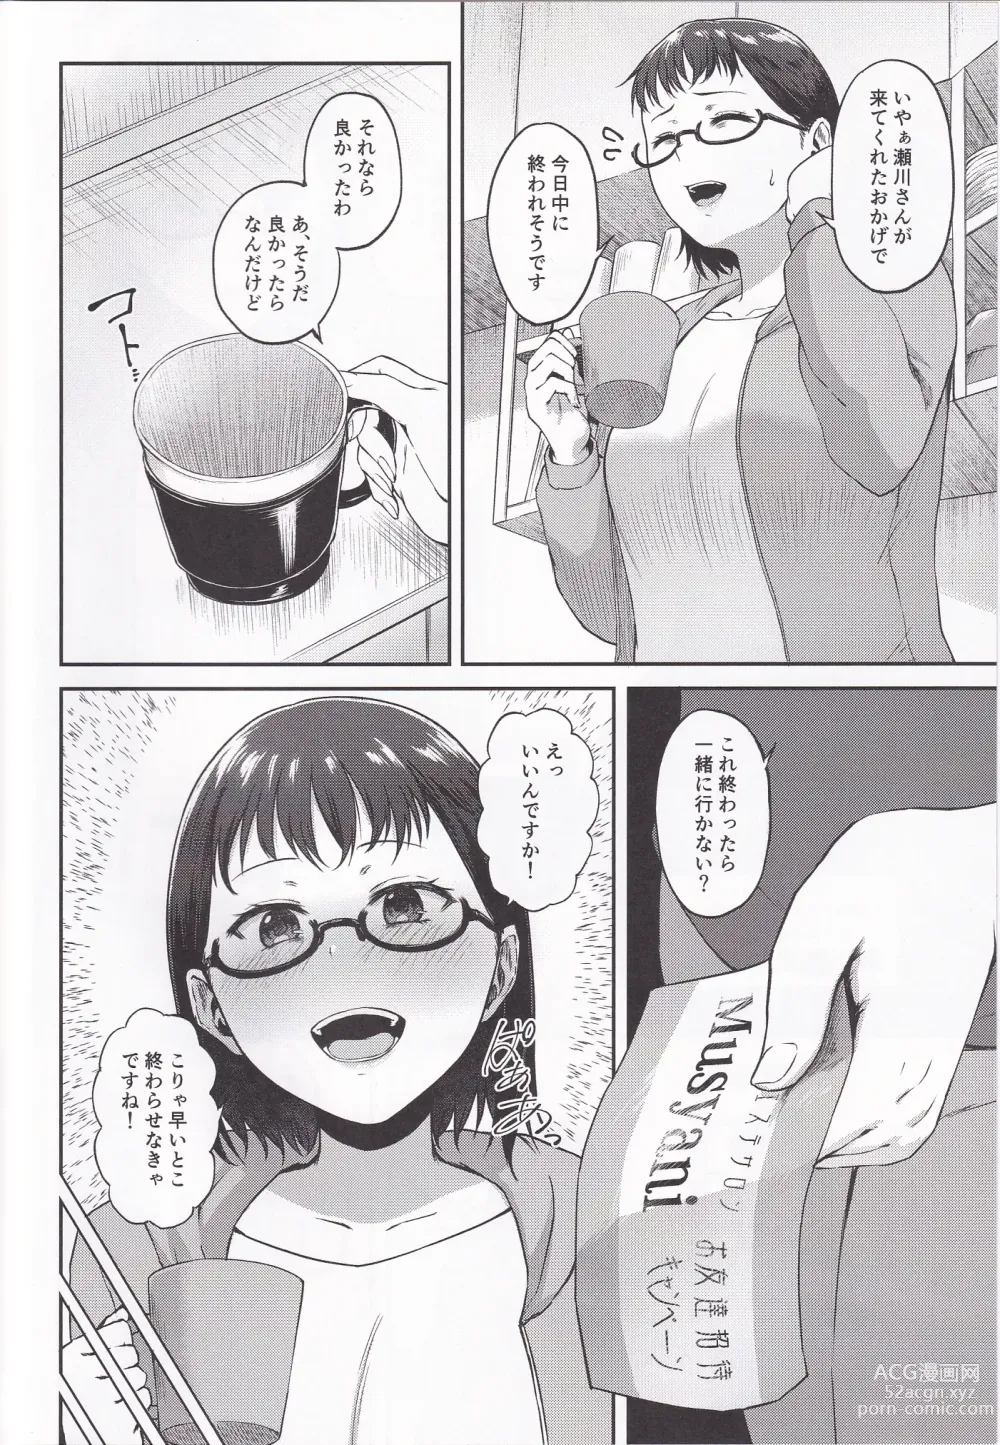 Page 3 of doujinshi Torotoro Hogusare Animator